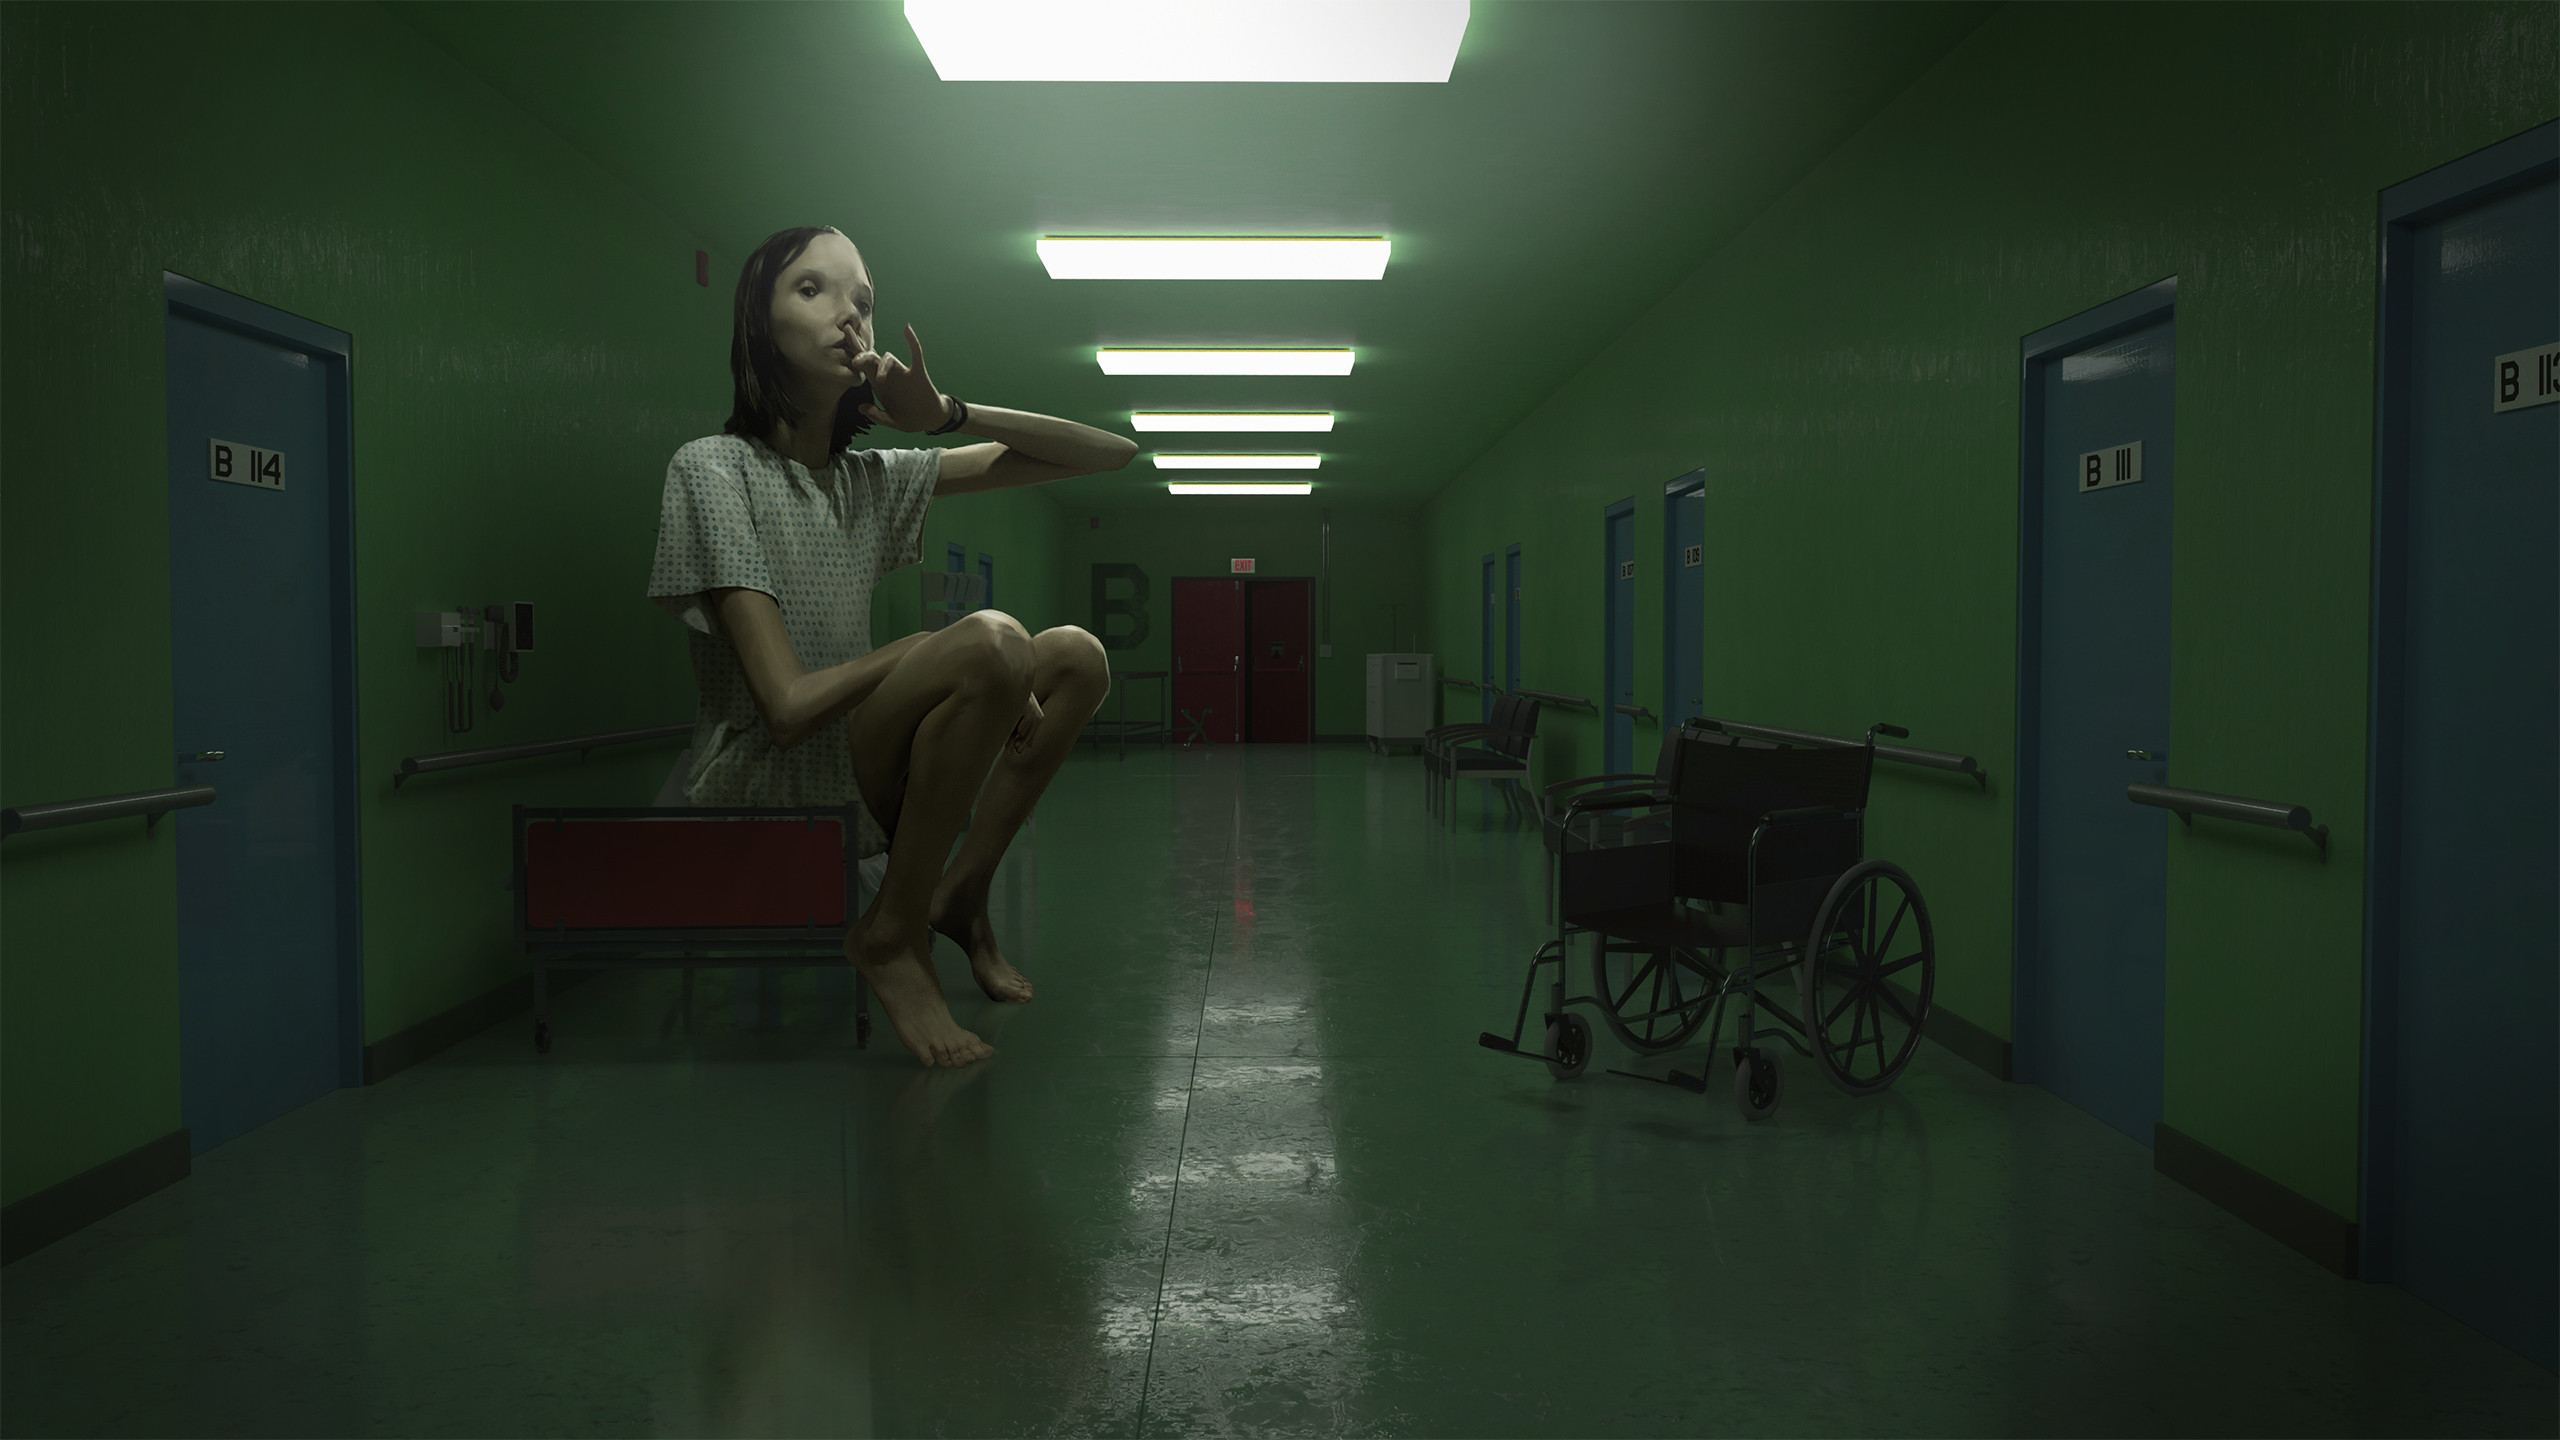 Doug Williams Artwork Hospital Asylum Digital Painting Digital Art Creature Young Woman Women White  2560x1440